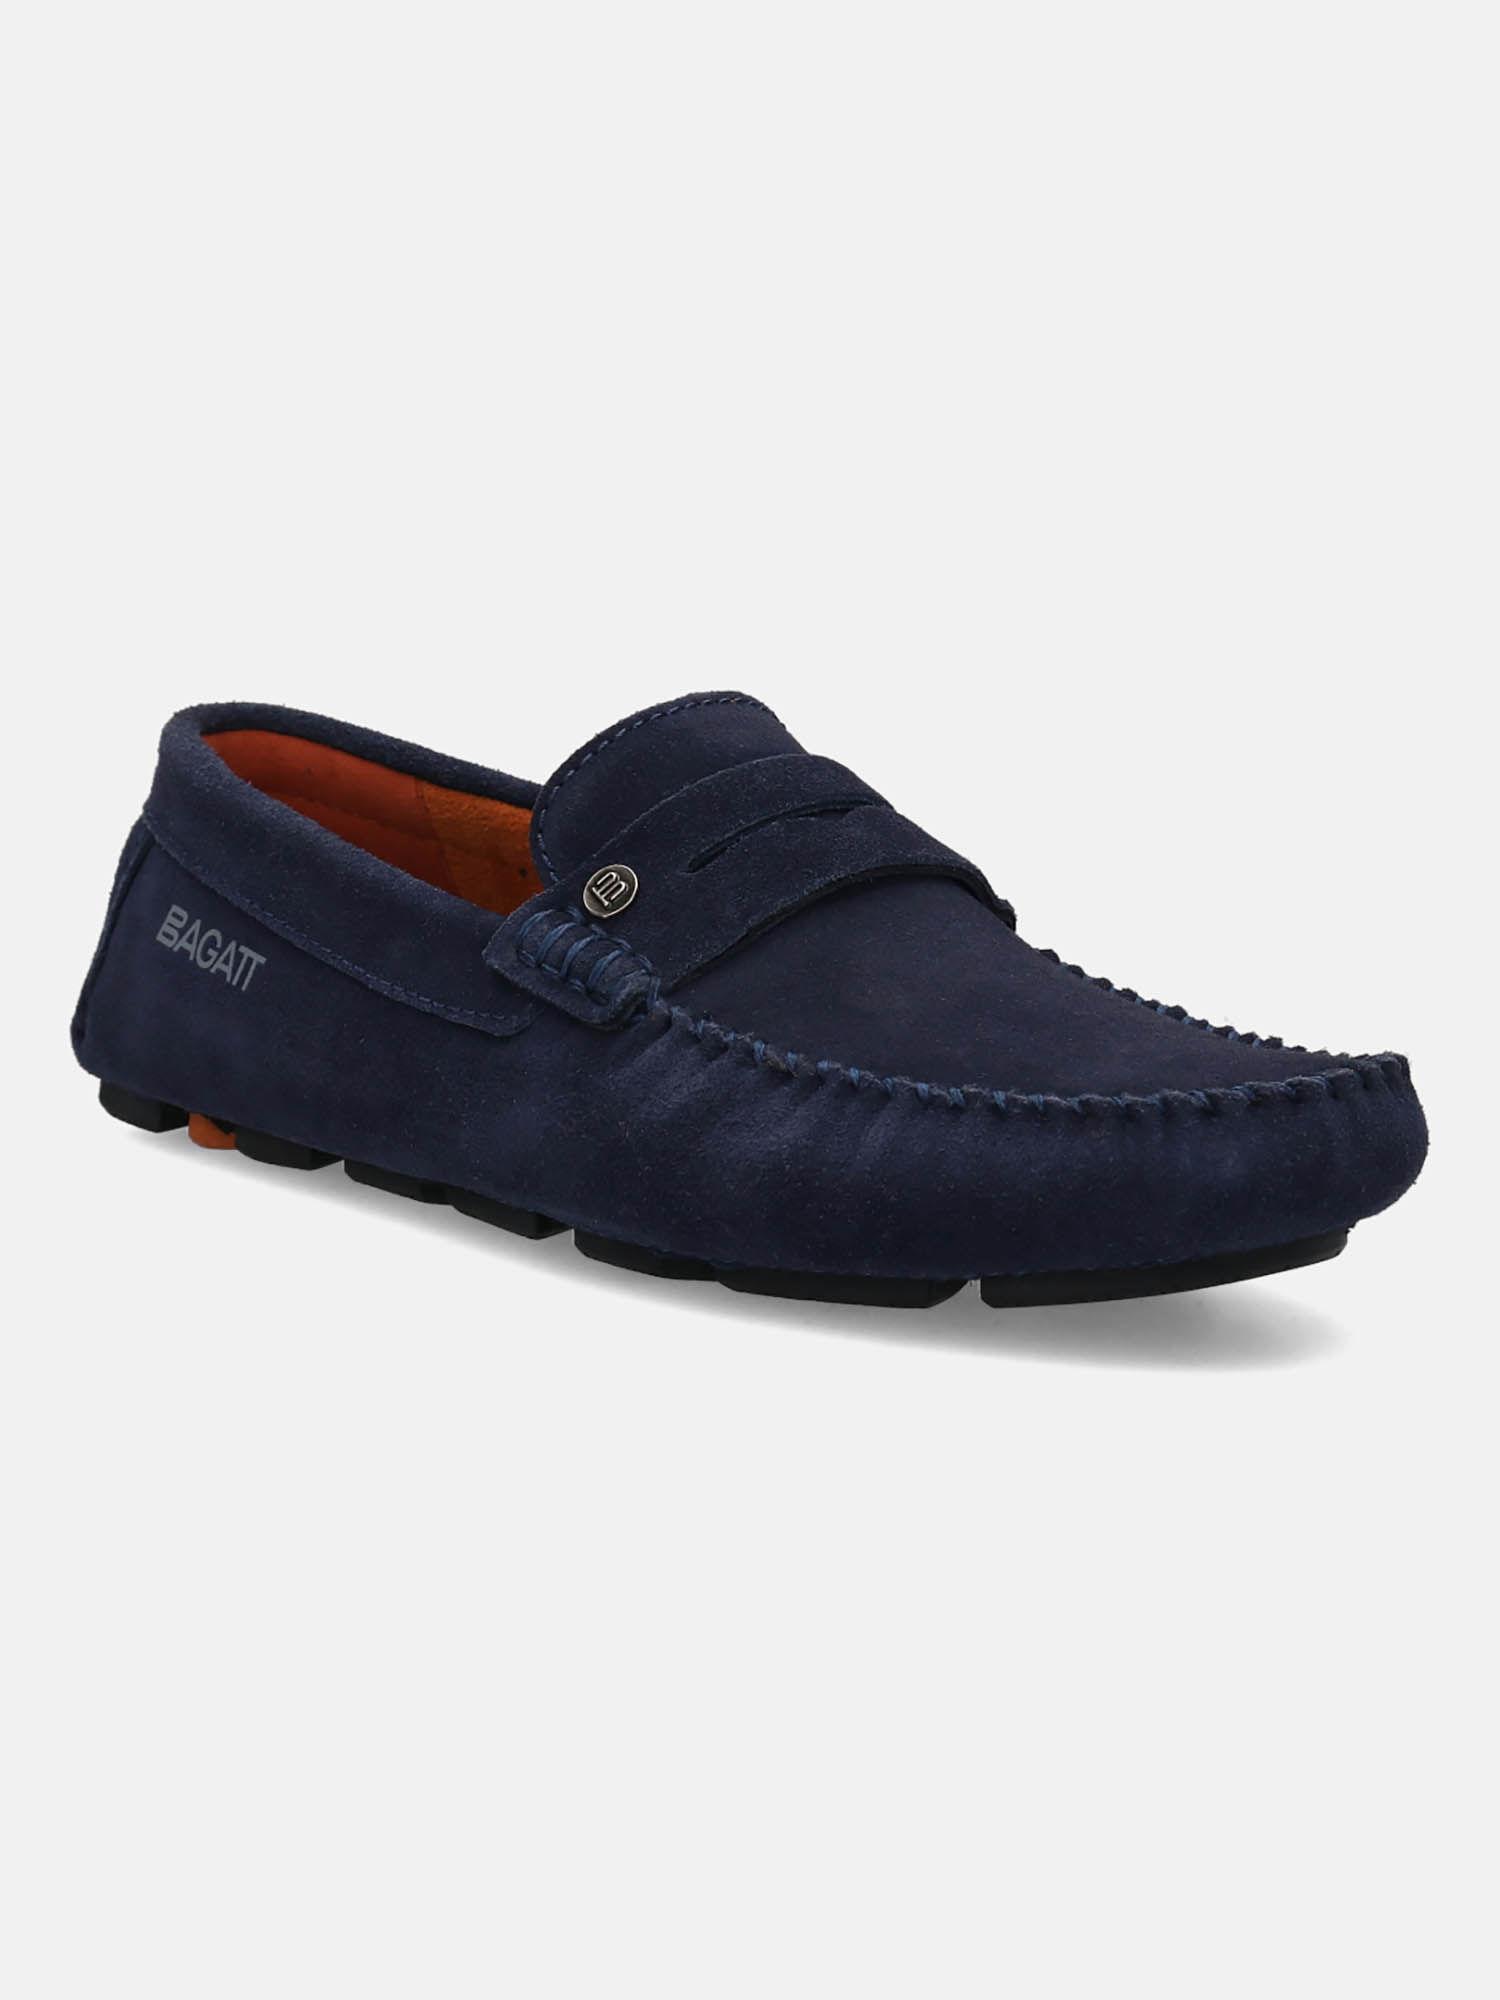 hexa men dark blue suede casual loafers slip-on